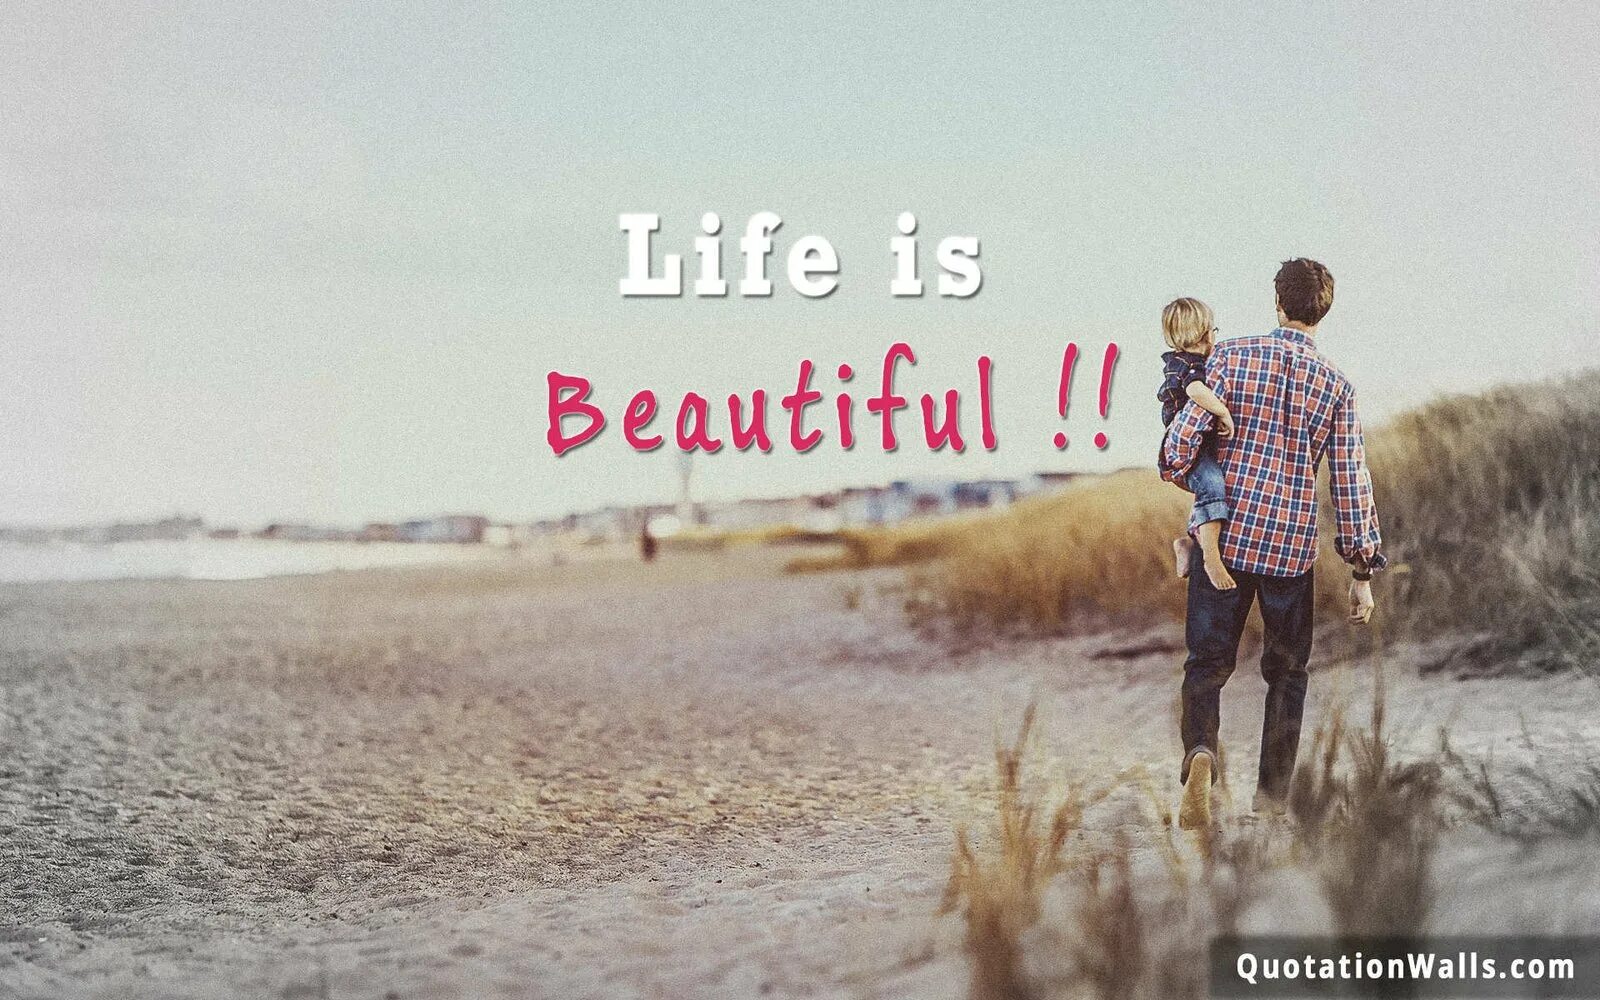 Life is beautiful. Life is beautiful картинки. Life is beautiful обои. Обои на телефон Life is beautiful. Both are beautiful